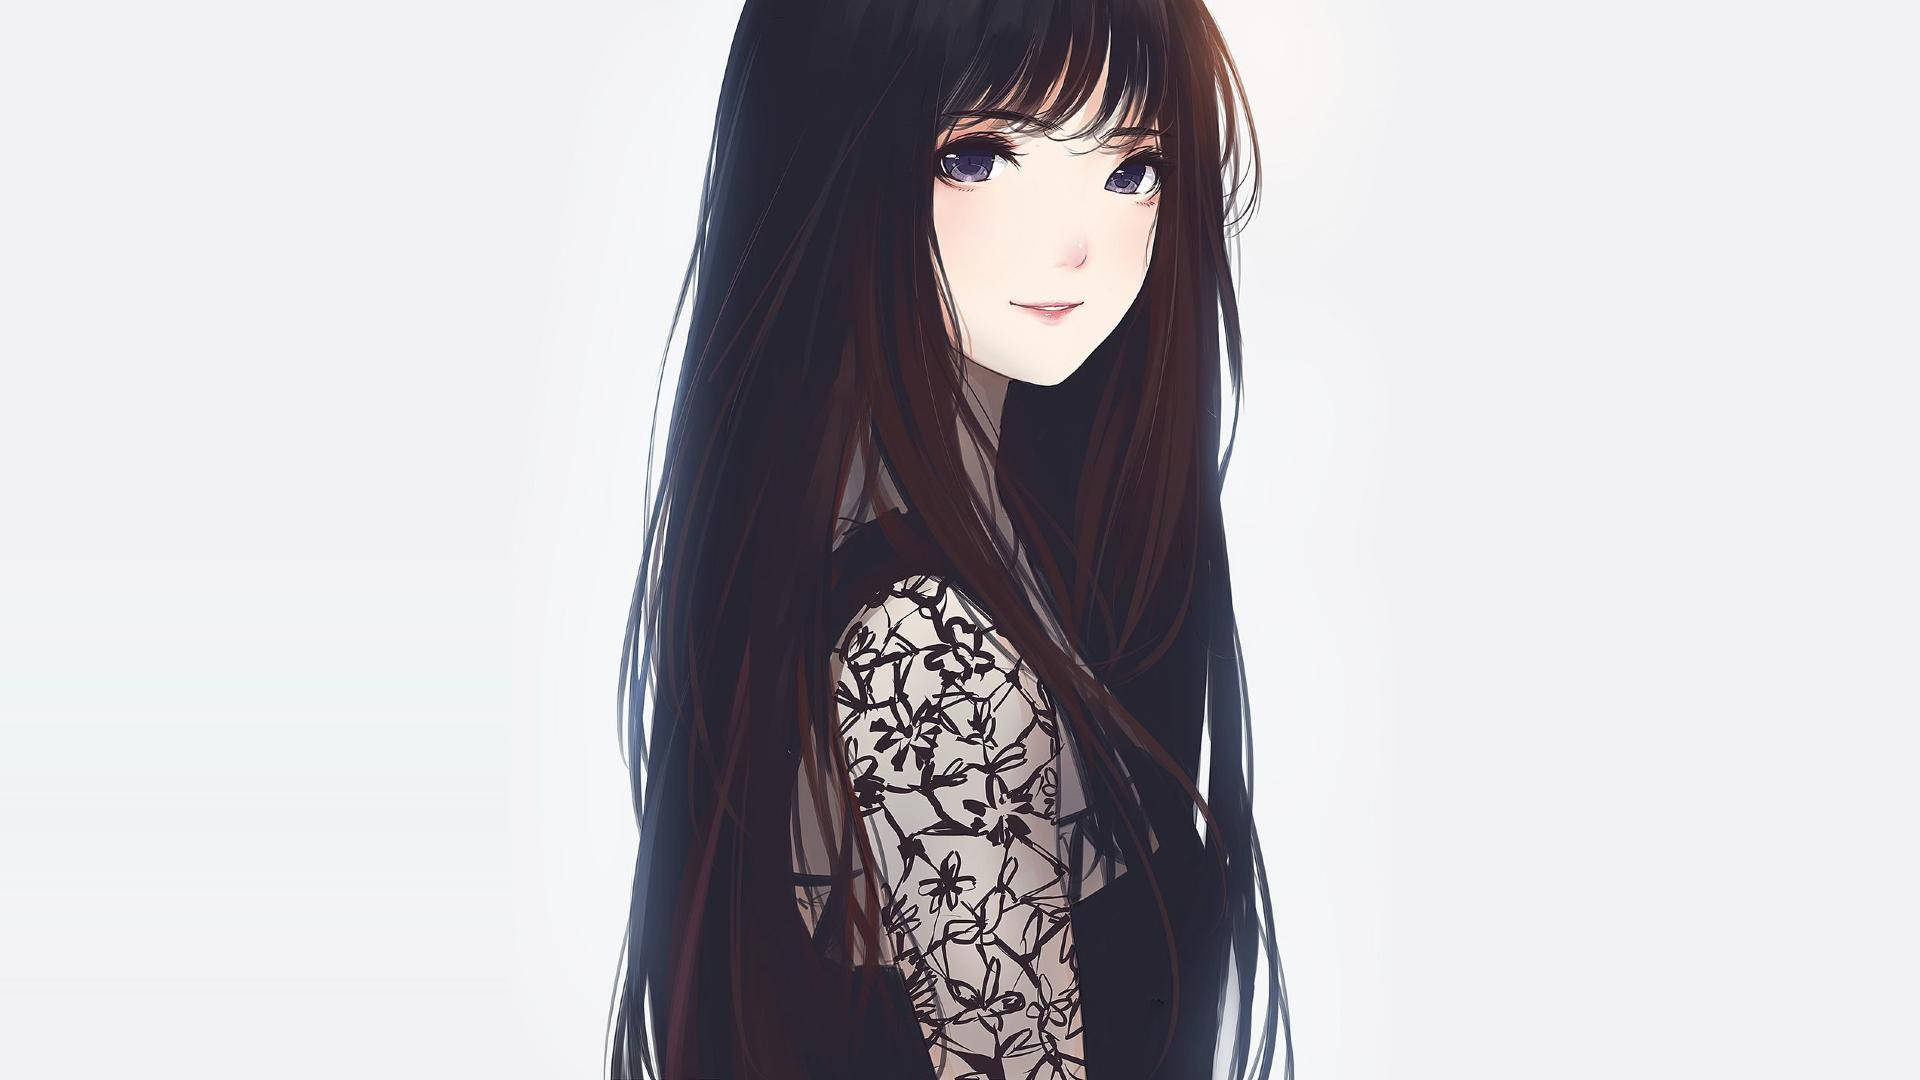 1920x1080 Full Hd Anime Girl In Black